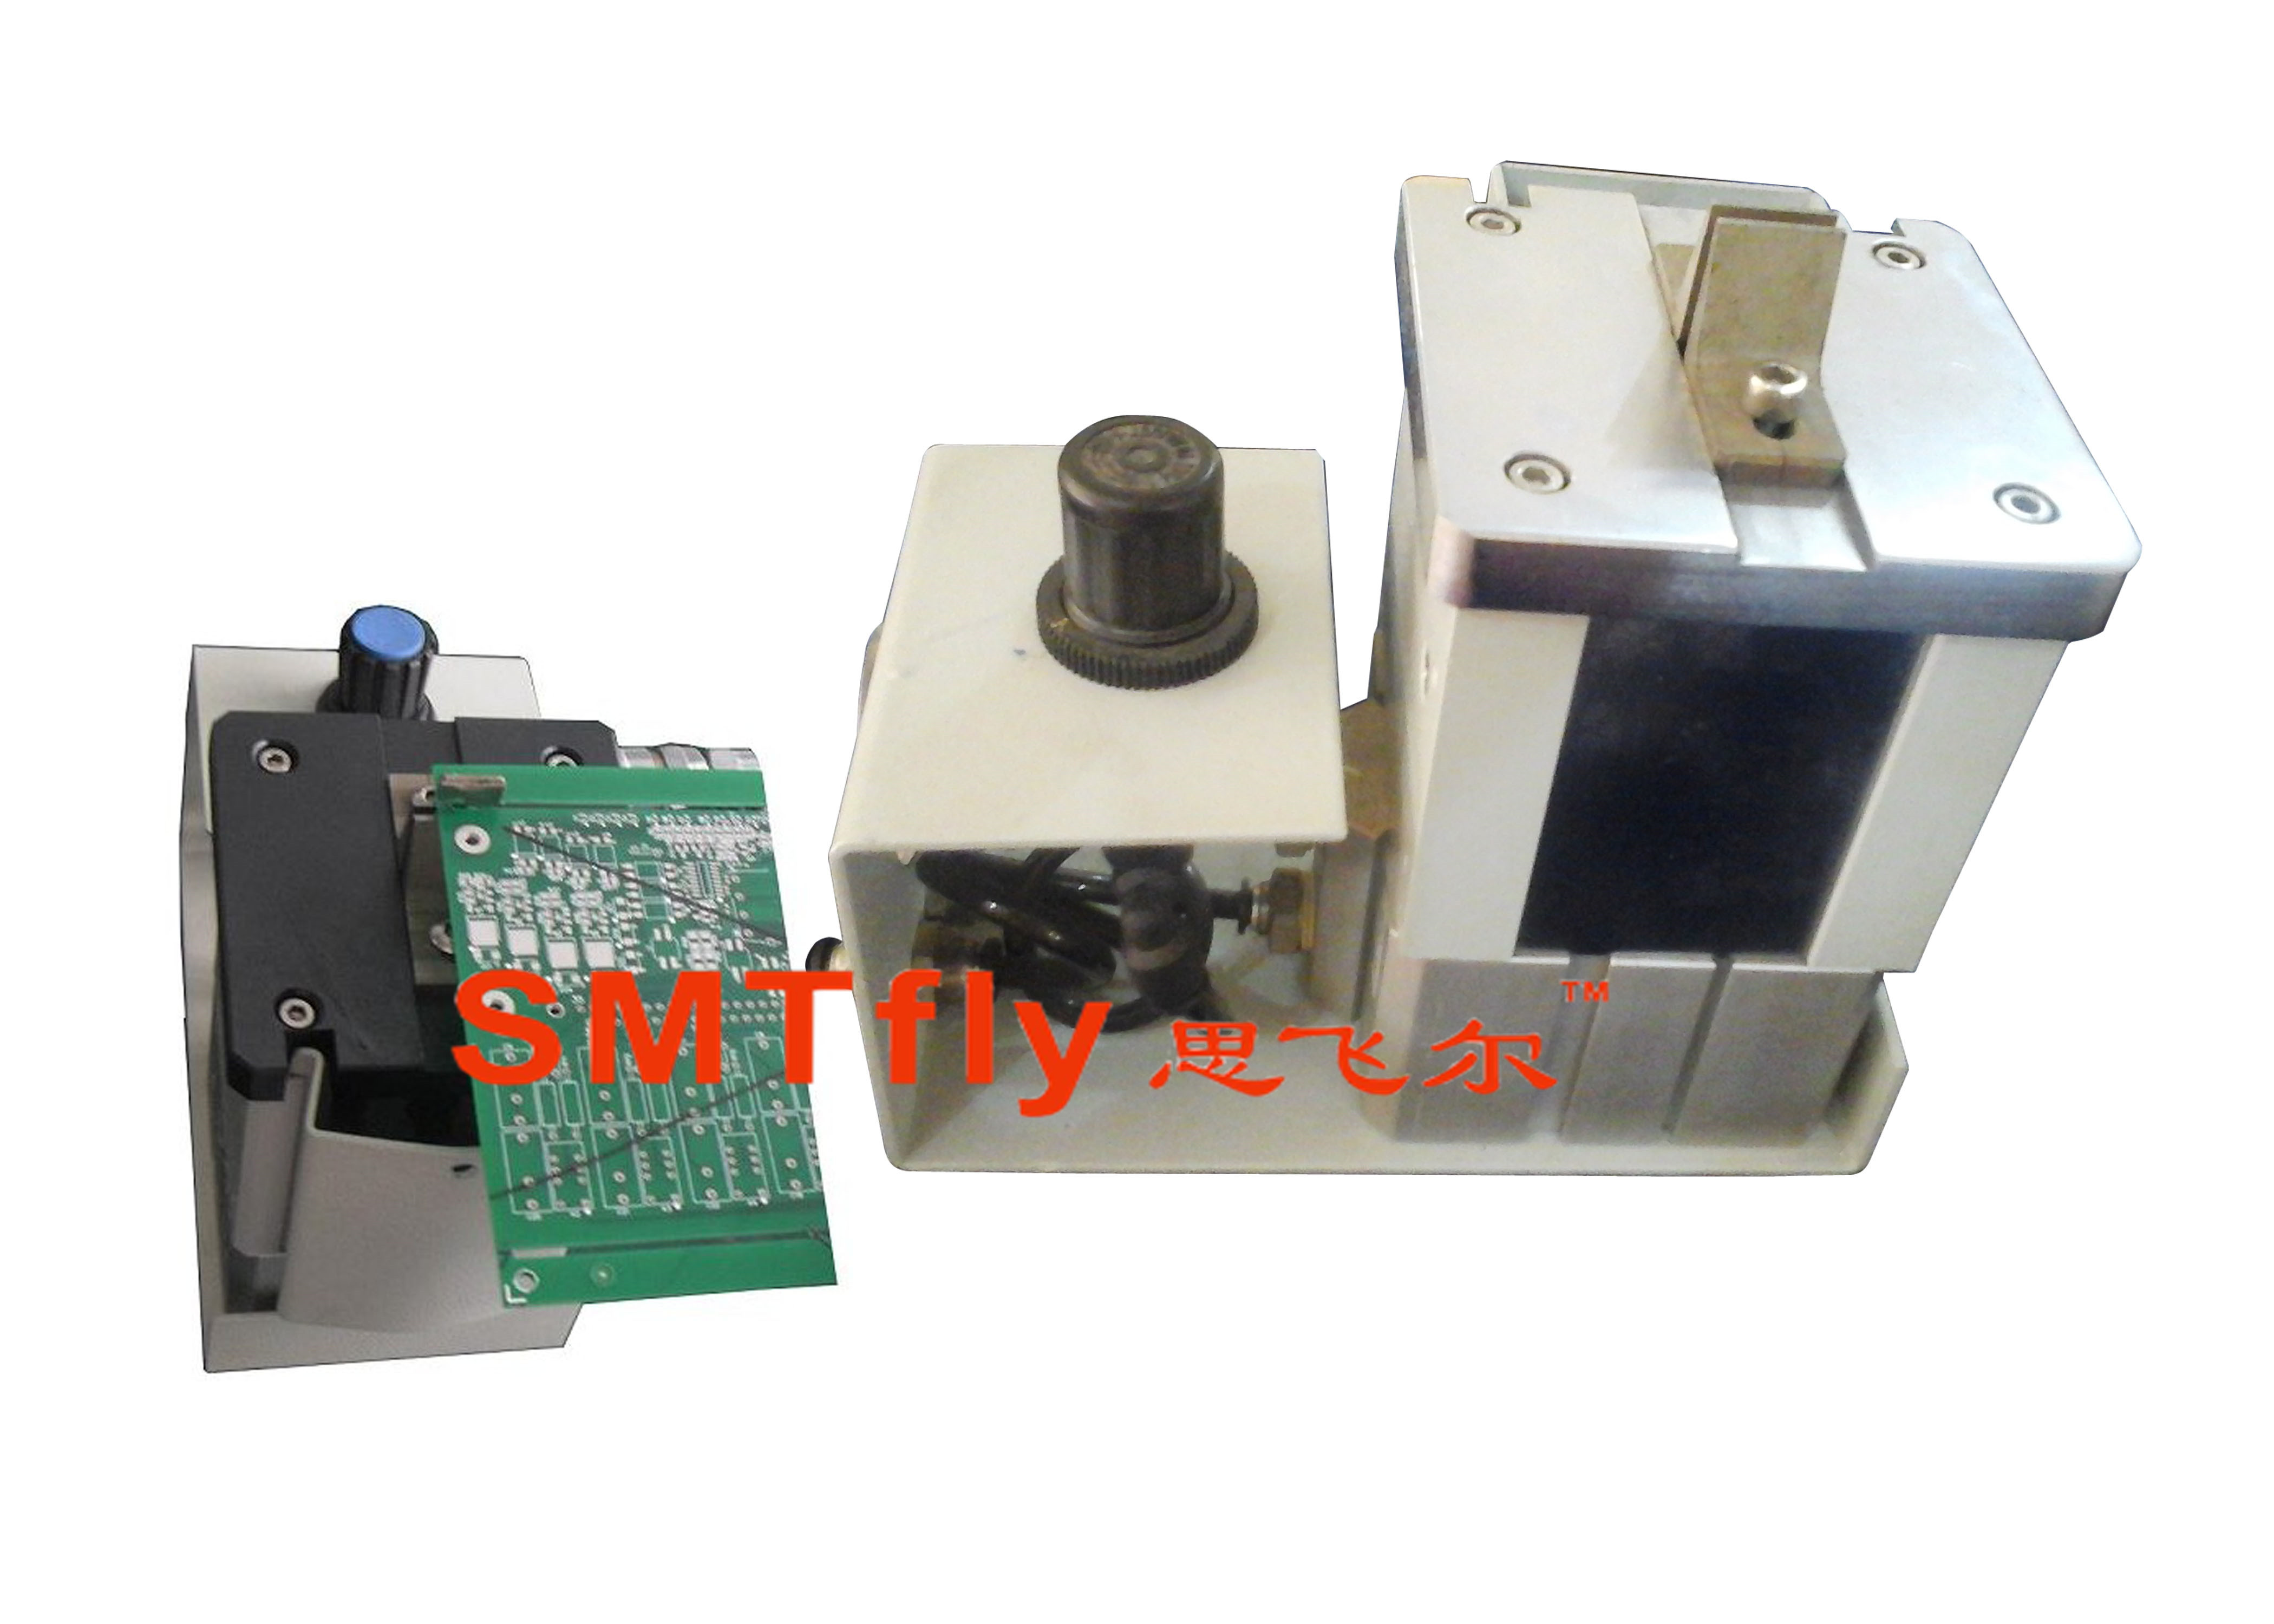 Hook-blade PCB Depaneling,SMTfly-LT